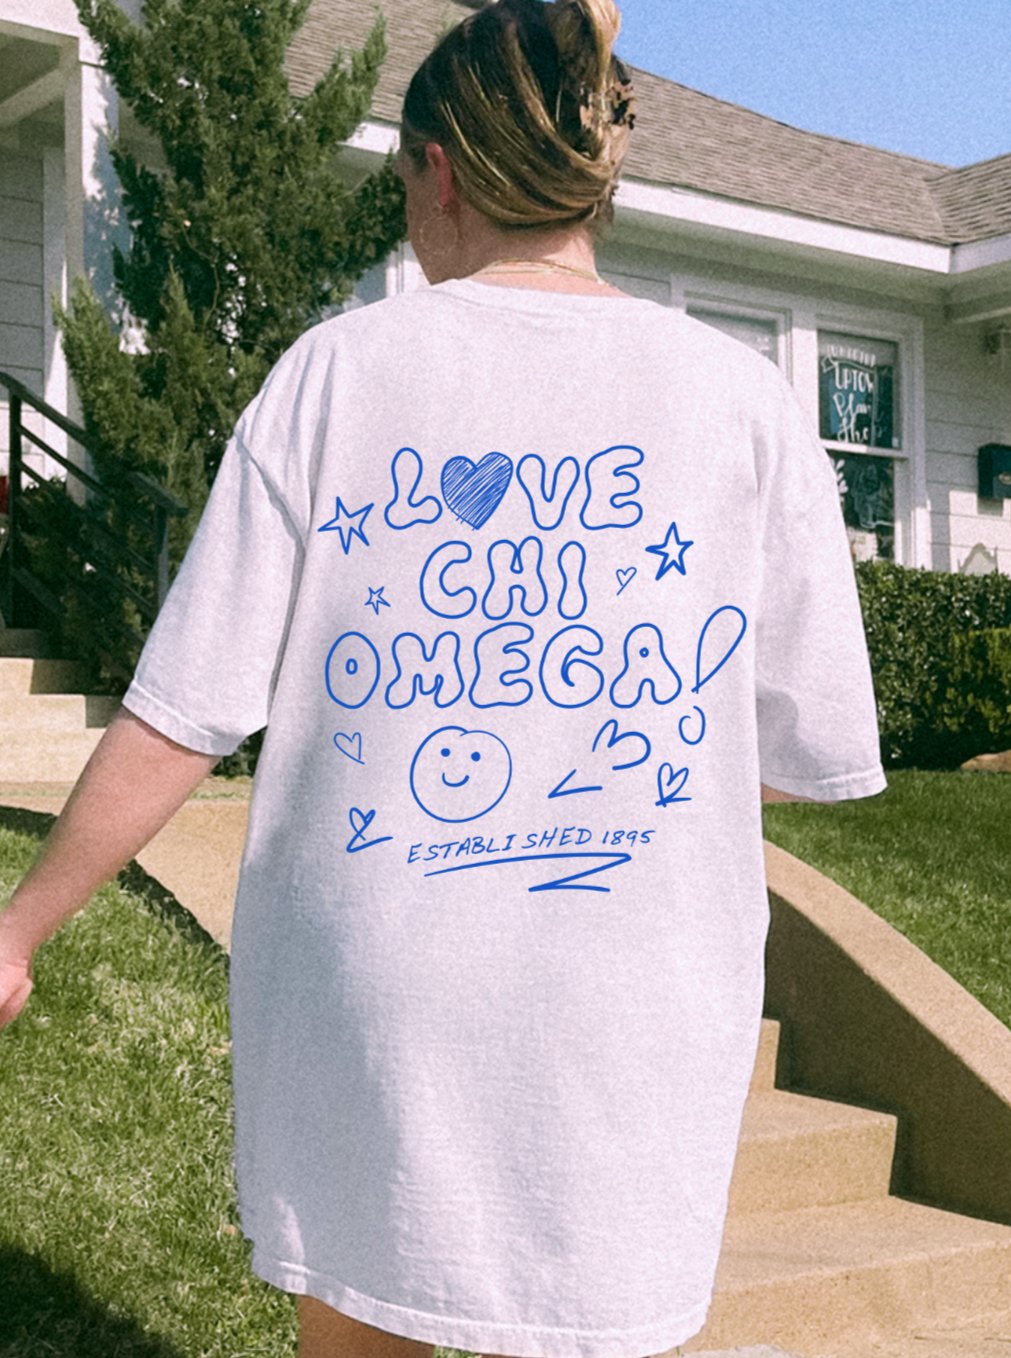 Chi Omega Love Doodle Sorority T-shirt